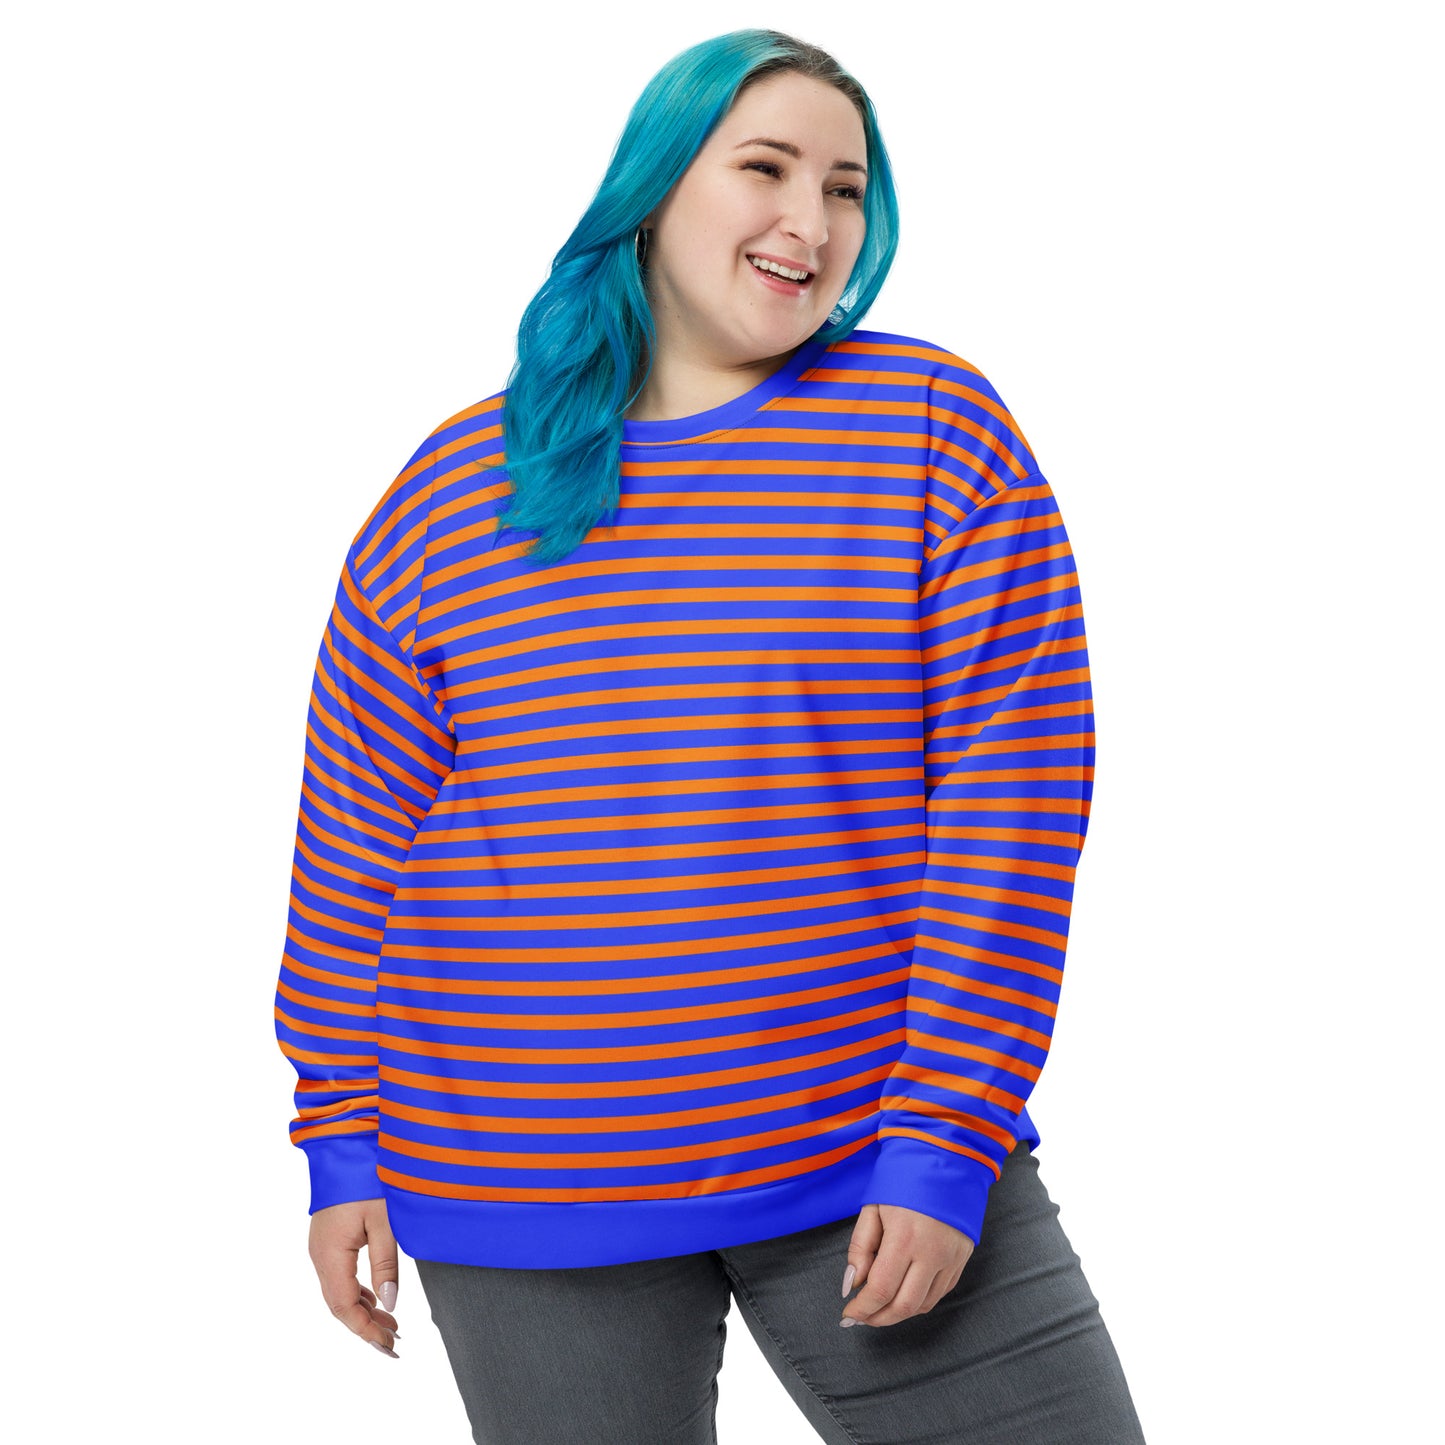 Striped Sweater in Blue and Orange: A Versatile Wardrobe Staple